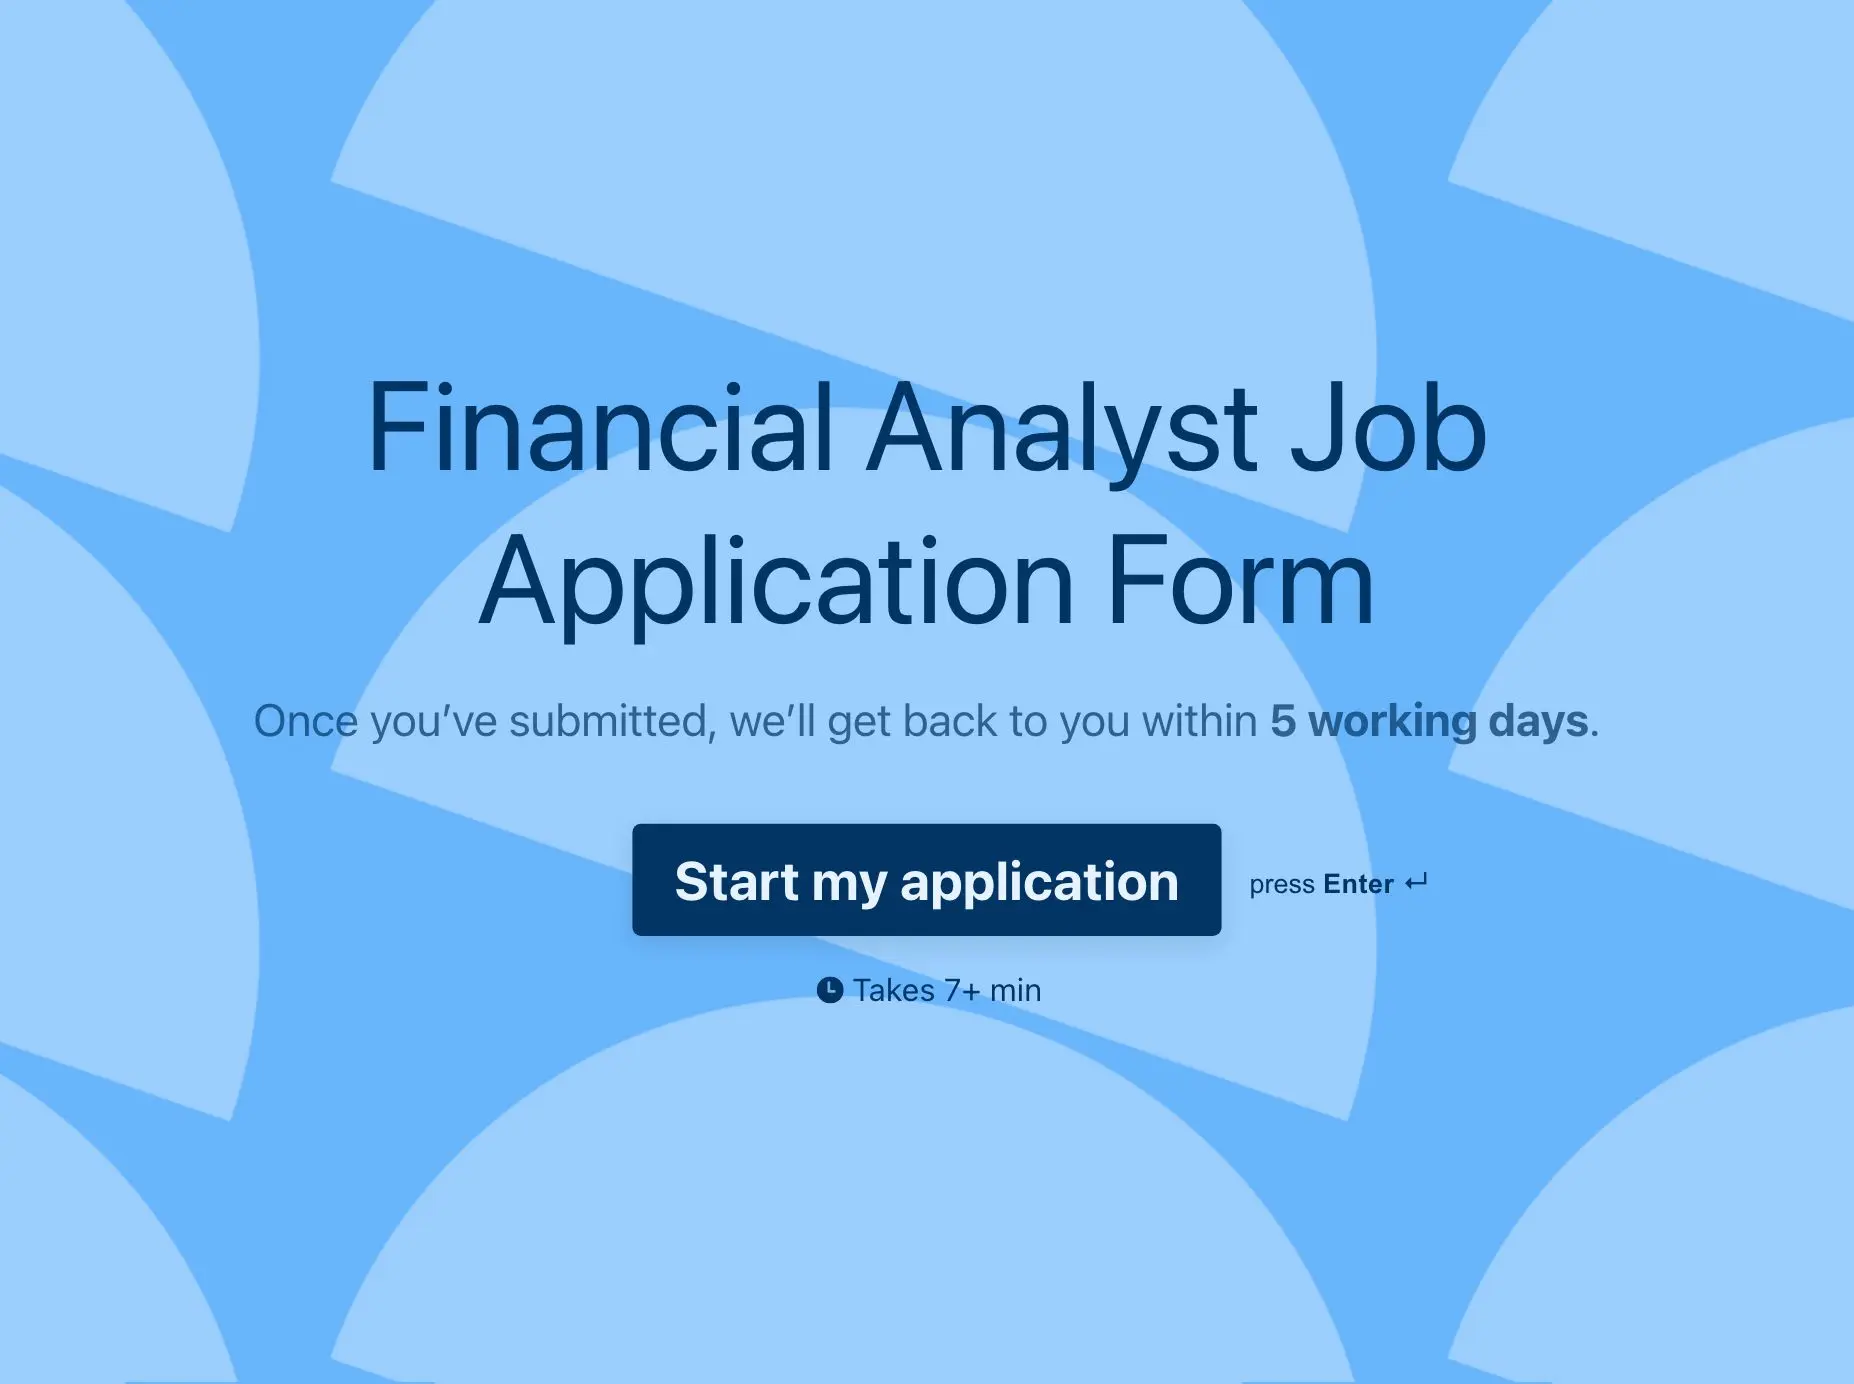 Financial Analyst Job Application Form Template Hero